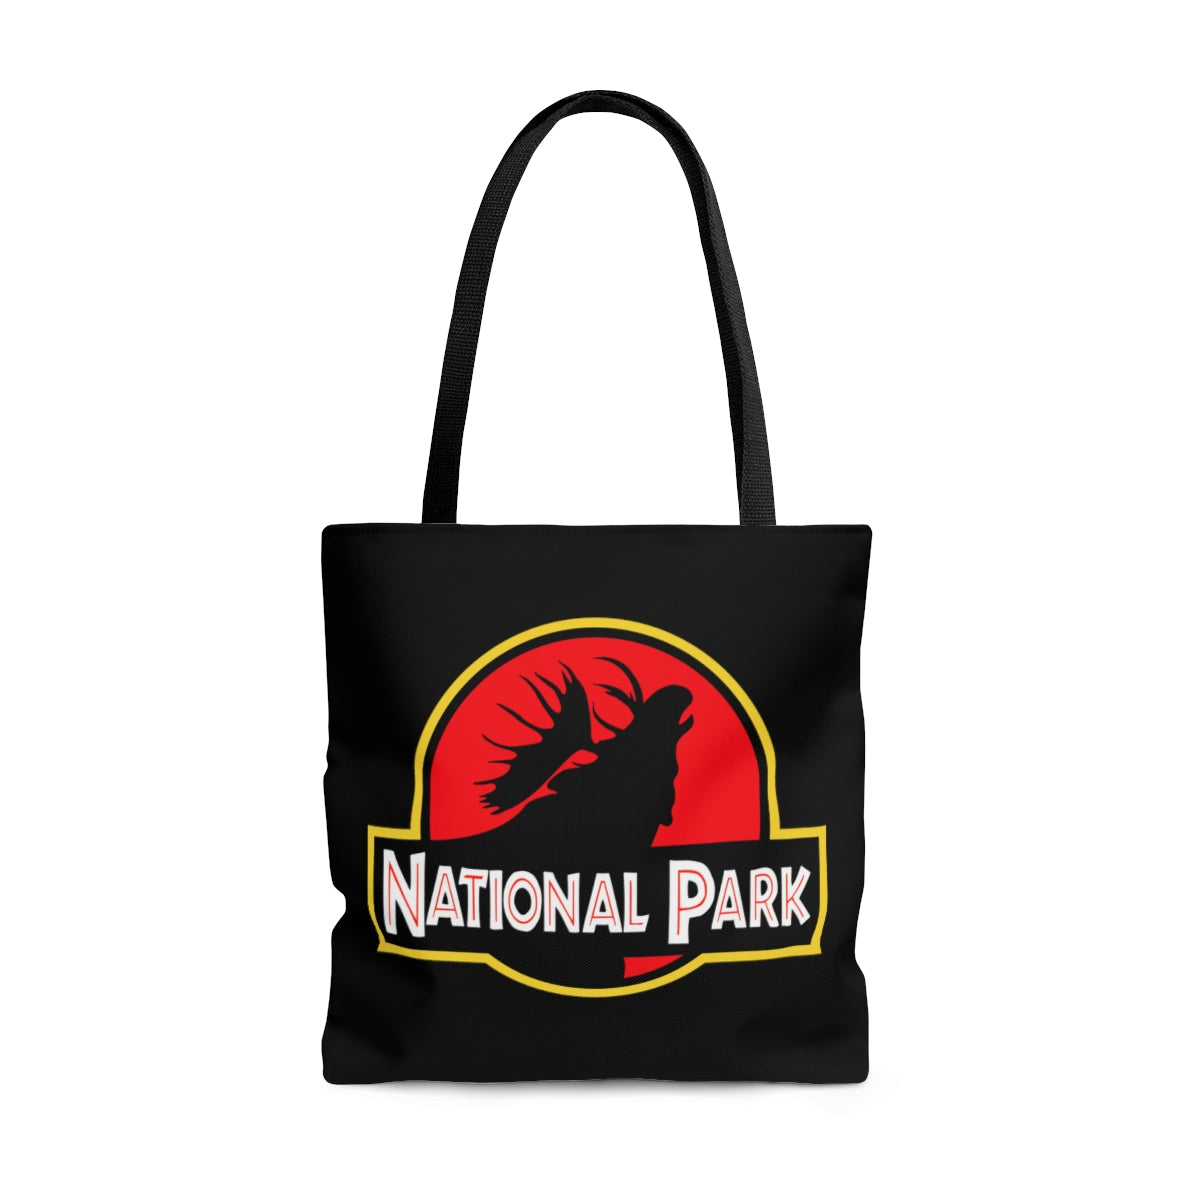 Moose National Park Tote Bag - Parody Logo